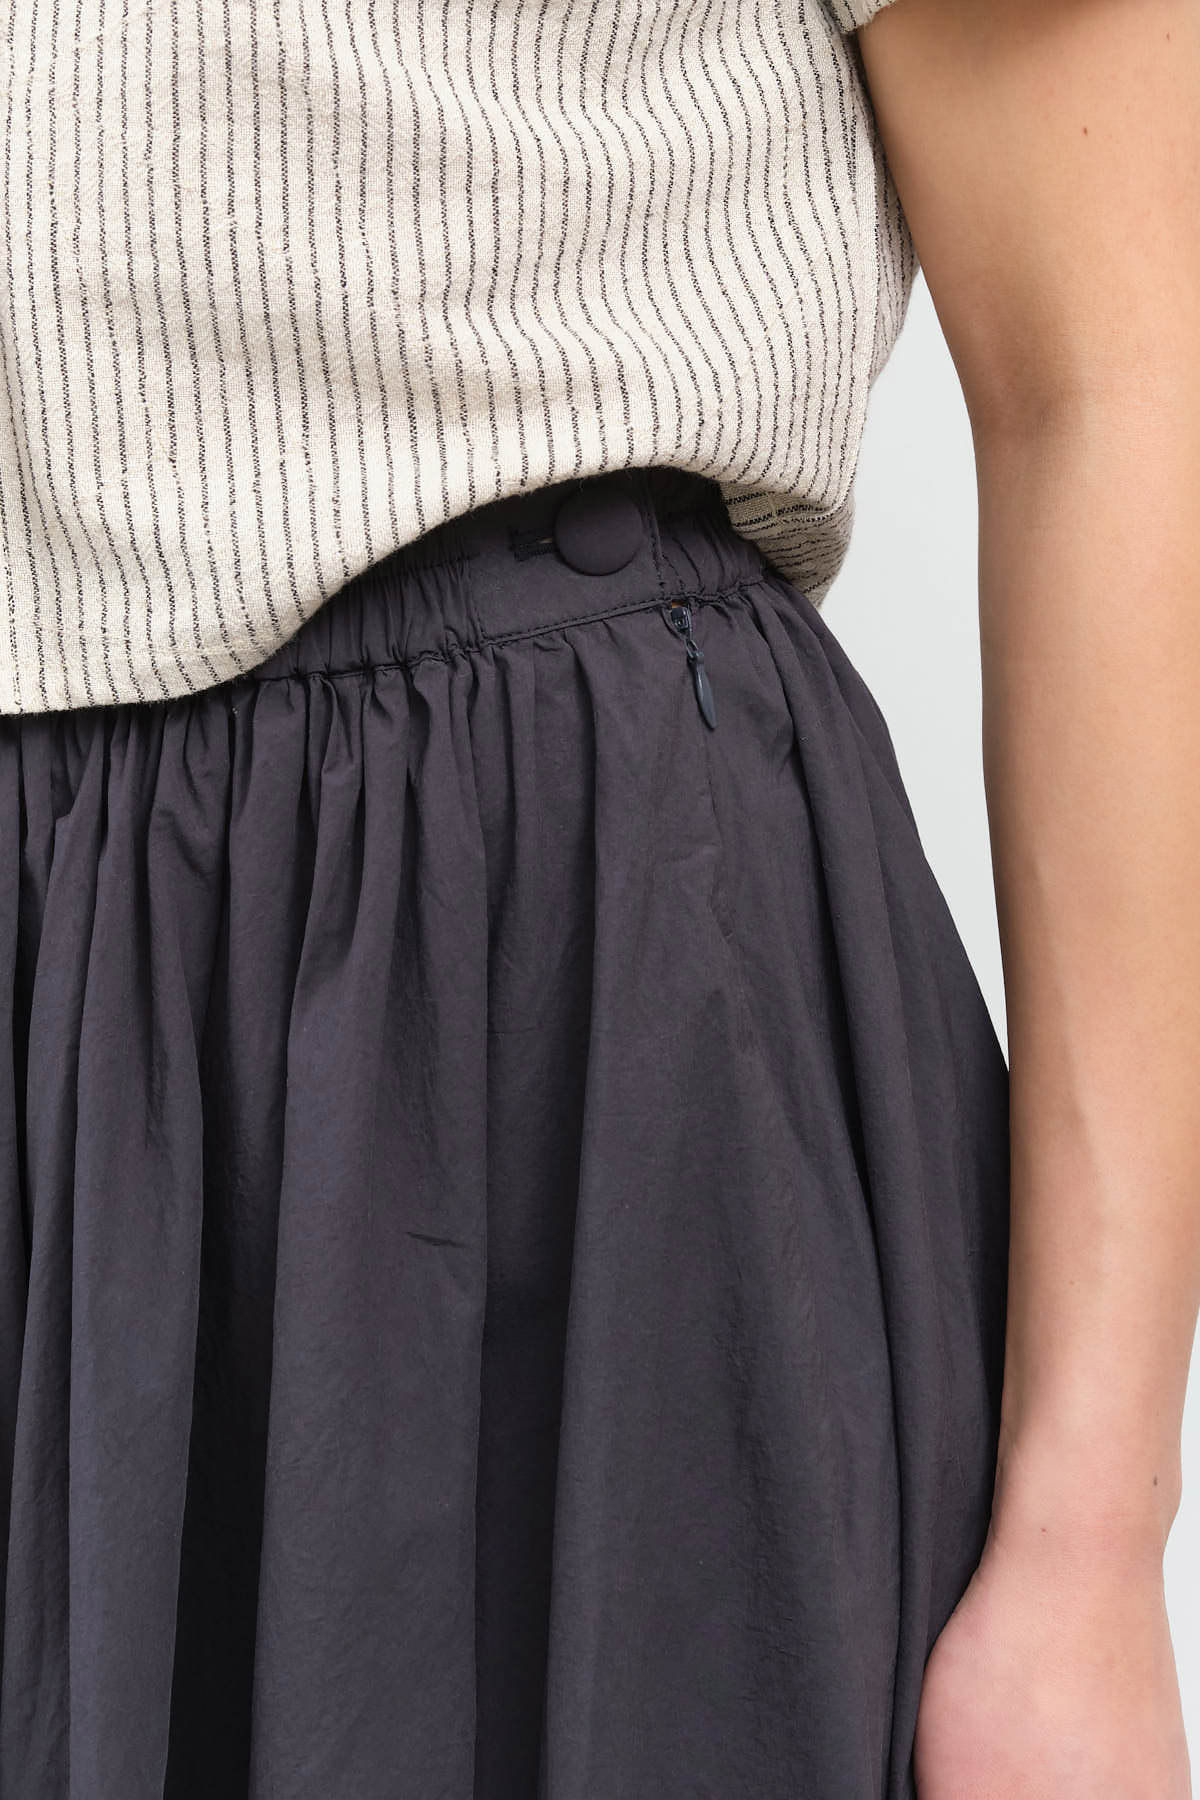 Waistband view of Papery Elastic Prairie Skirt in Navy Black